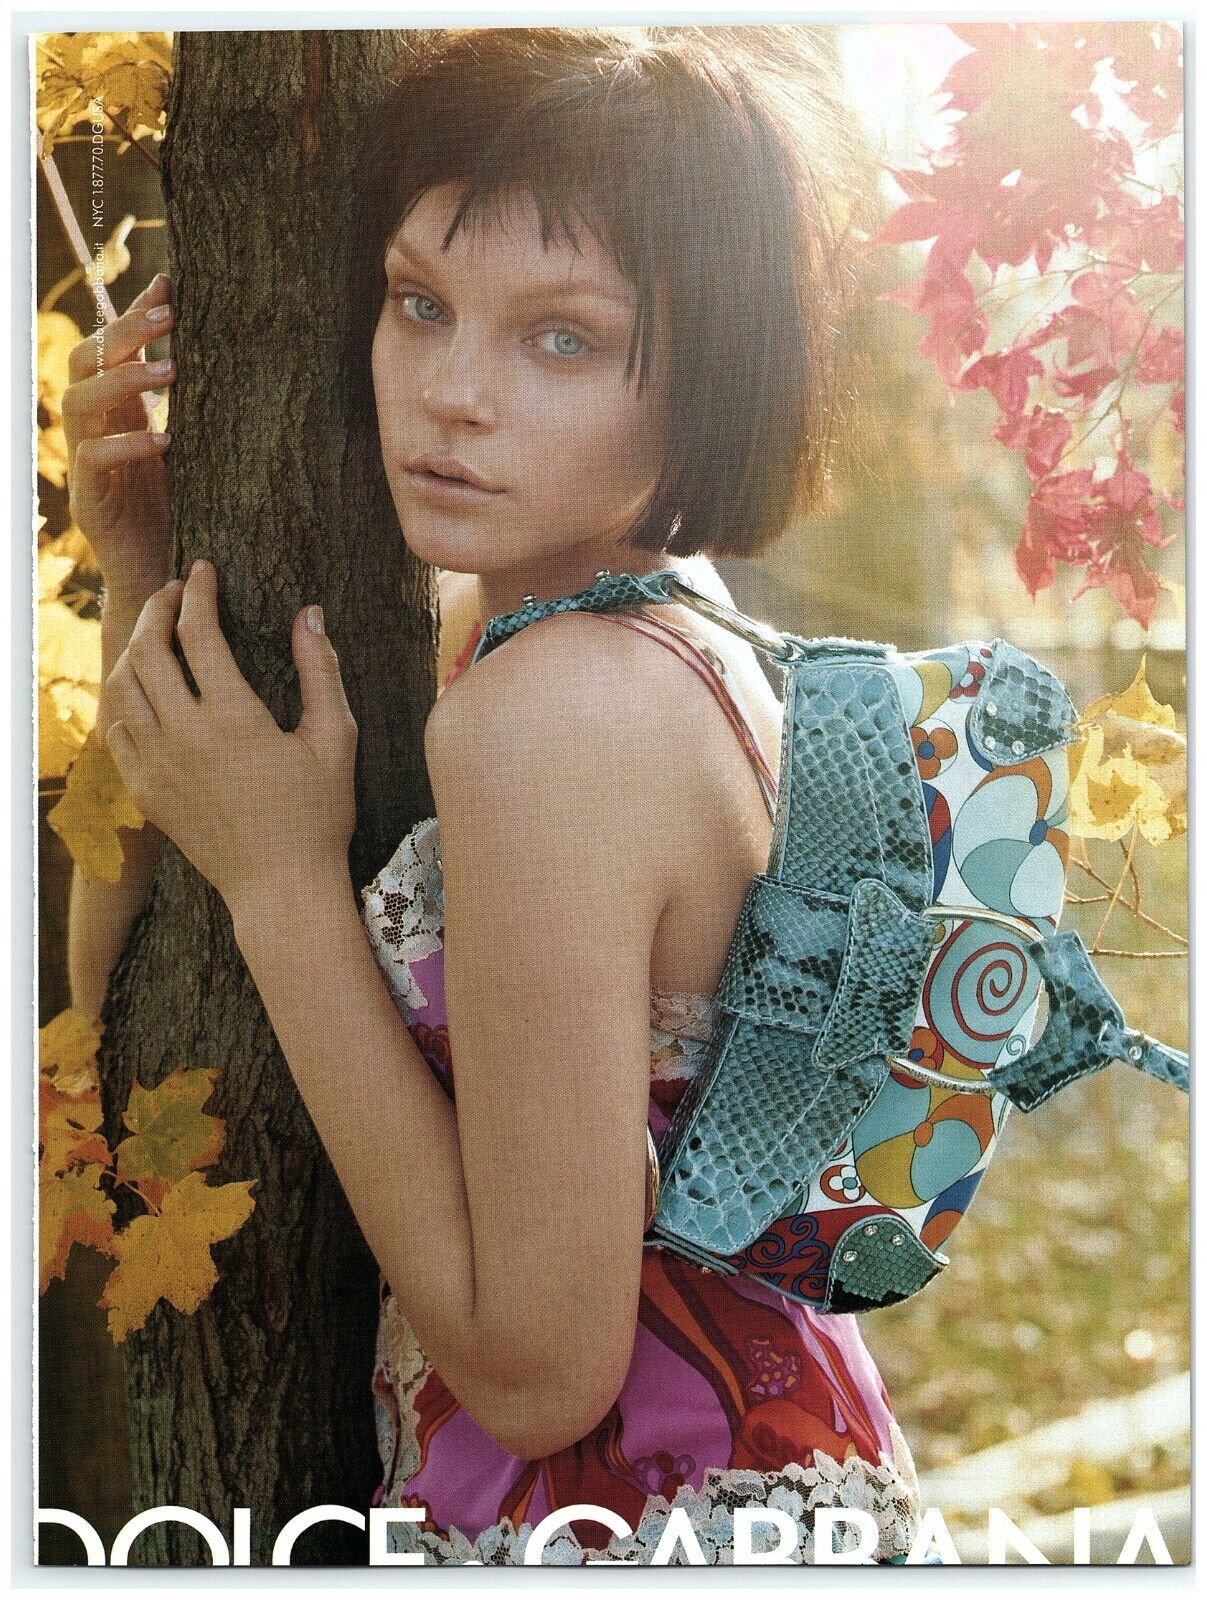 2004 Dolce & Gabbana Print Ad, Snakeskin Purse Hand Bag Short Hair Brunette Tree